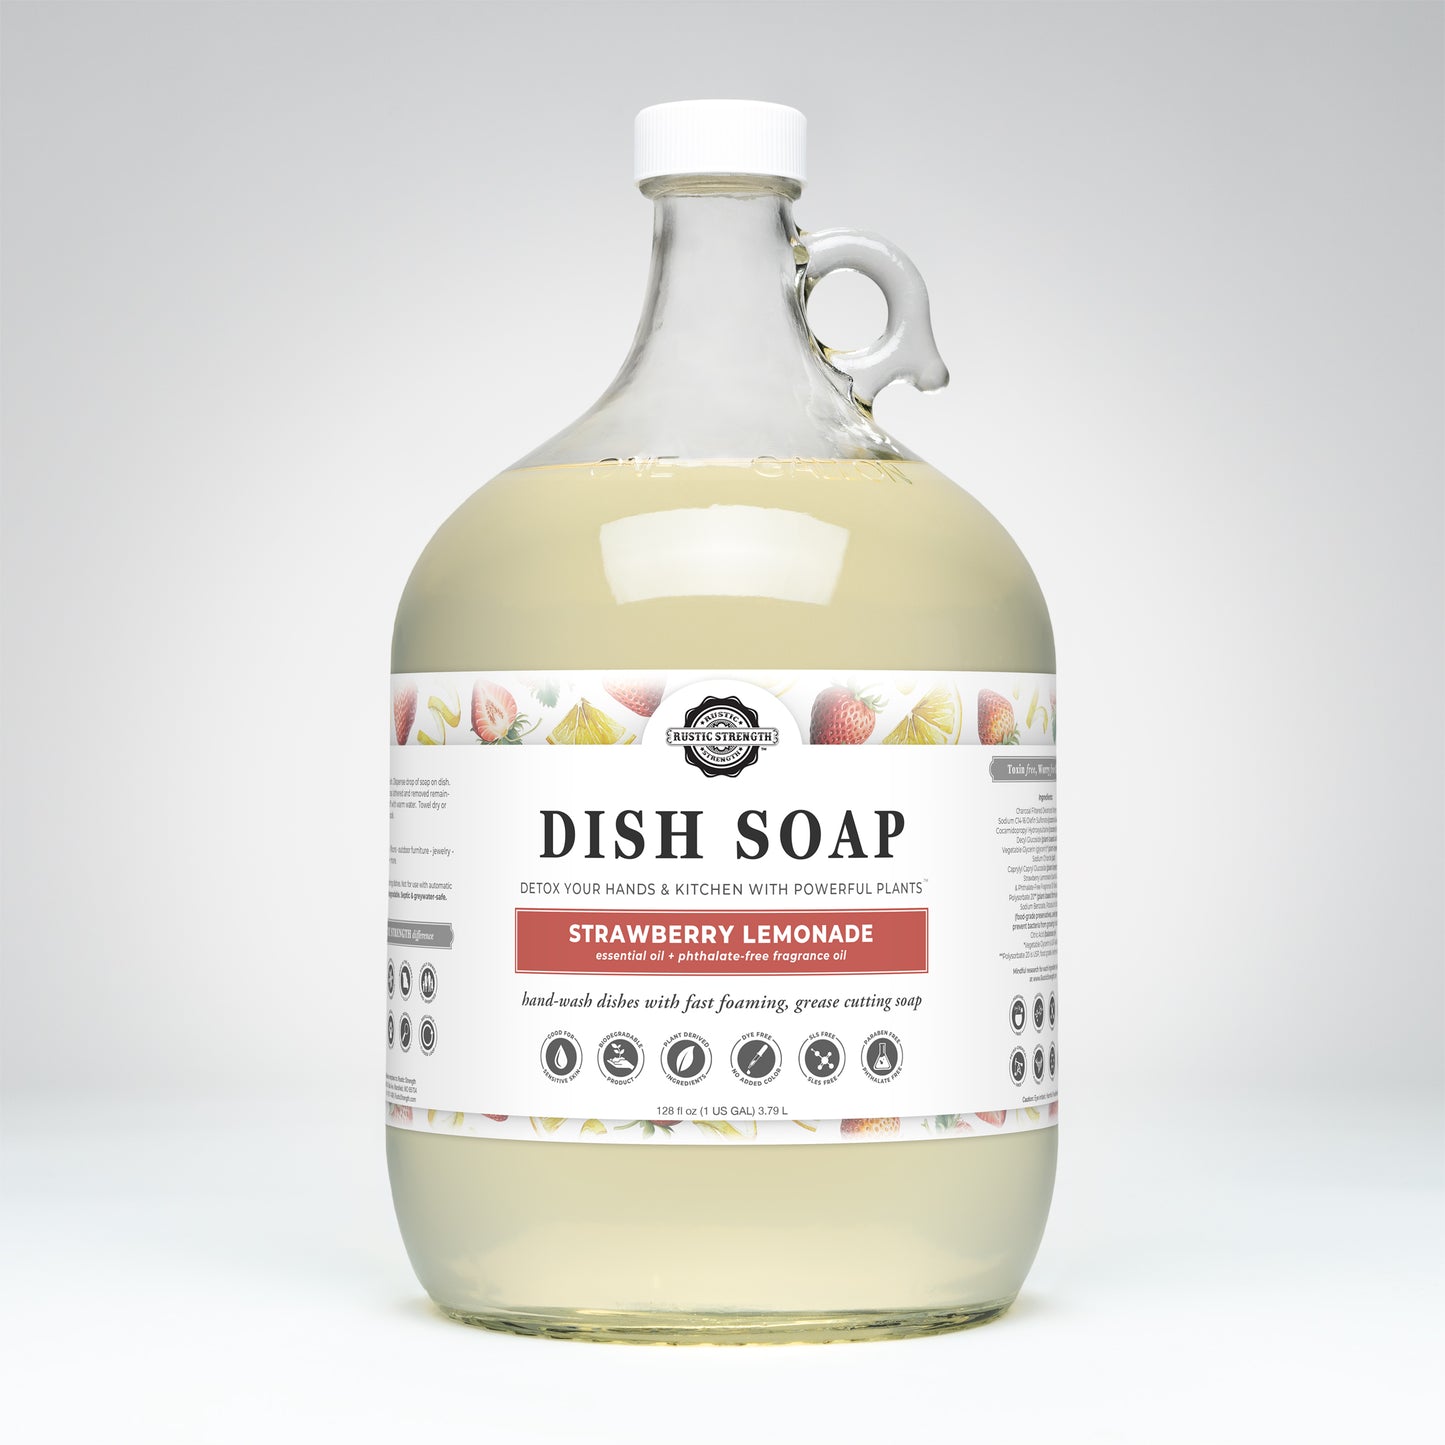 Dish Soap | Summer Scents